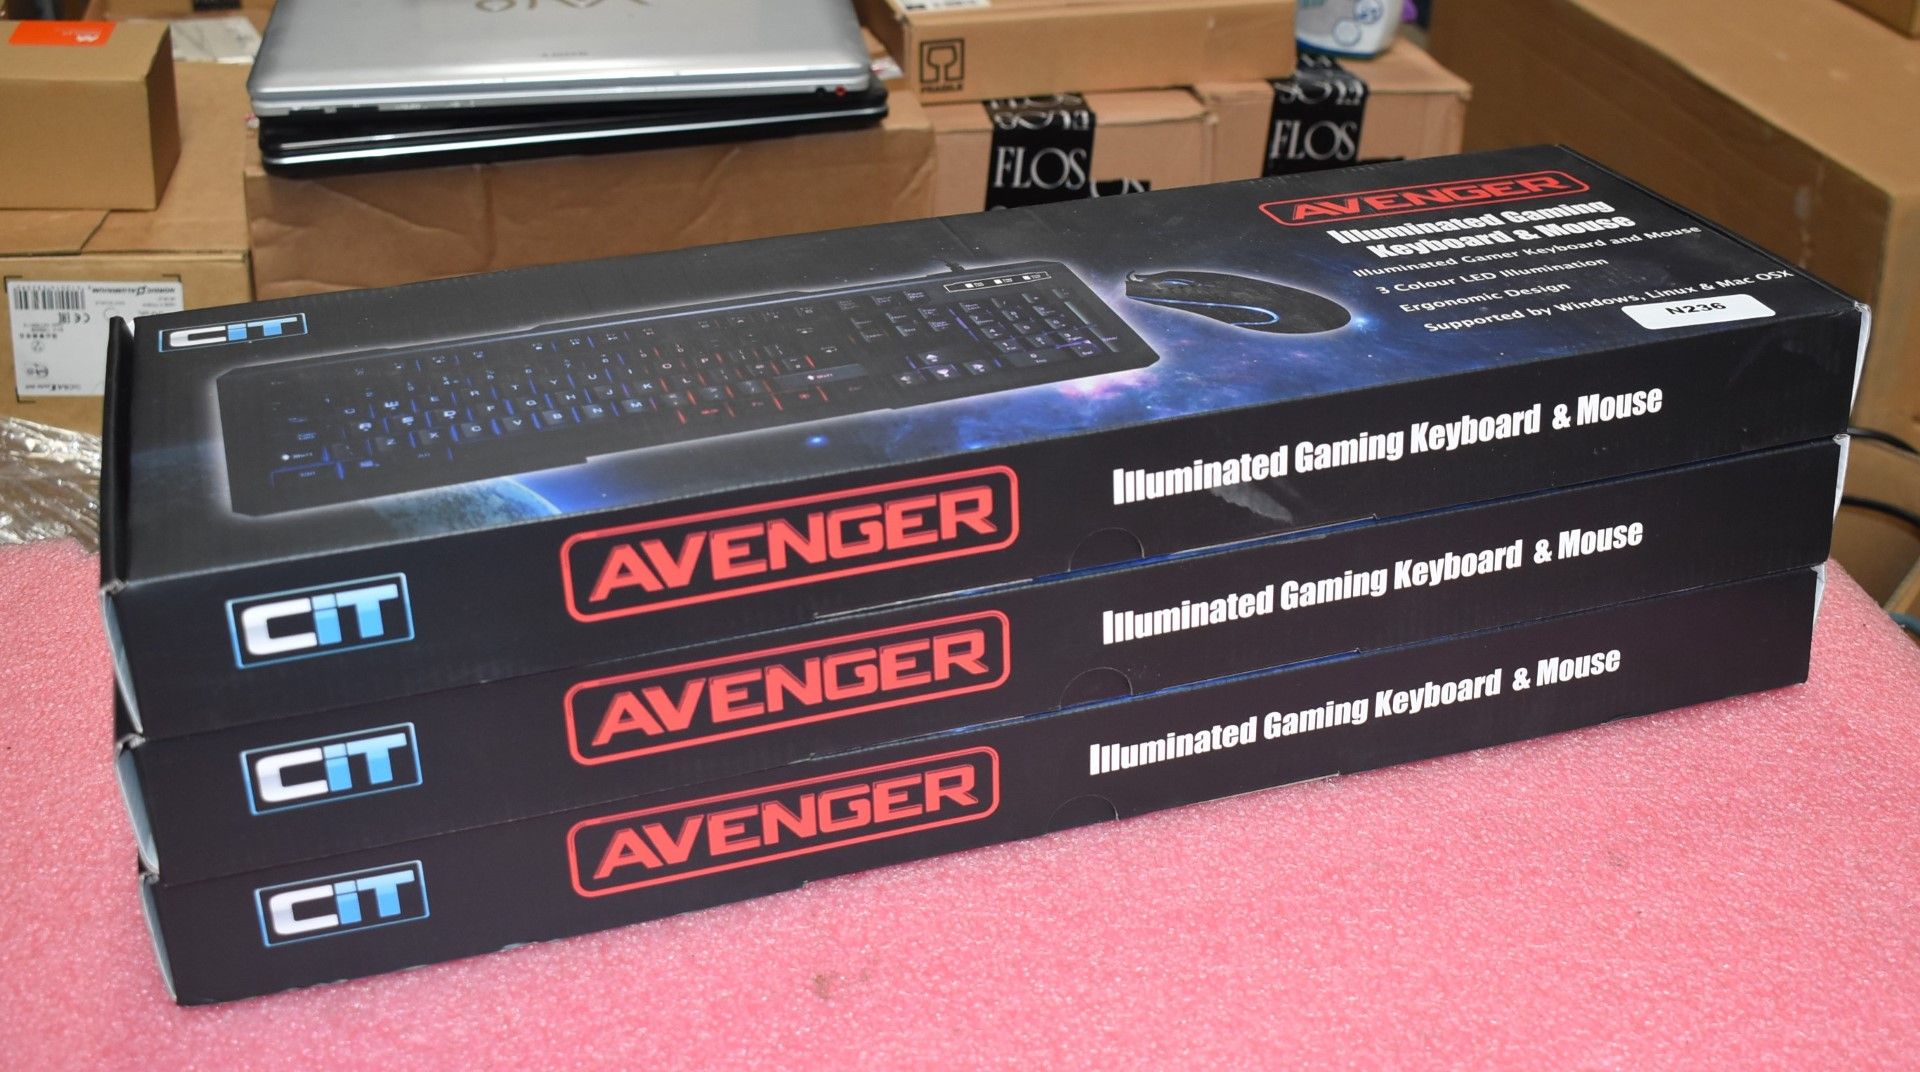 3 x CIT Avenger Illuminated Gaming Keyboard and Mouse - New & Boxed - Image 6 of 7